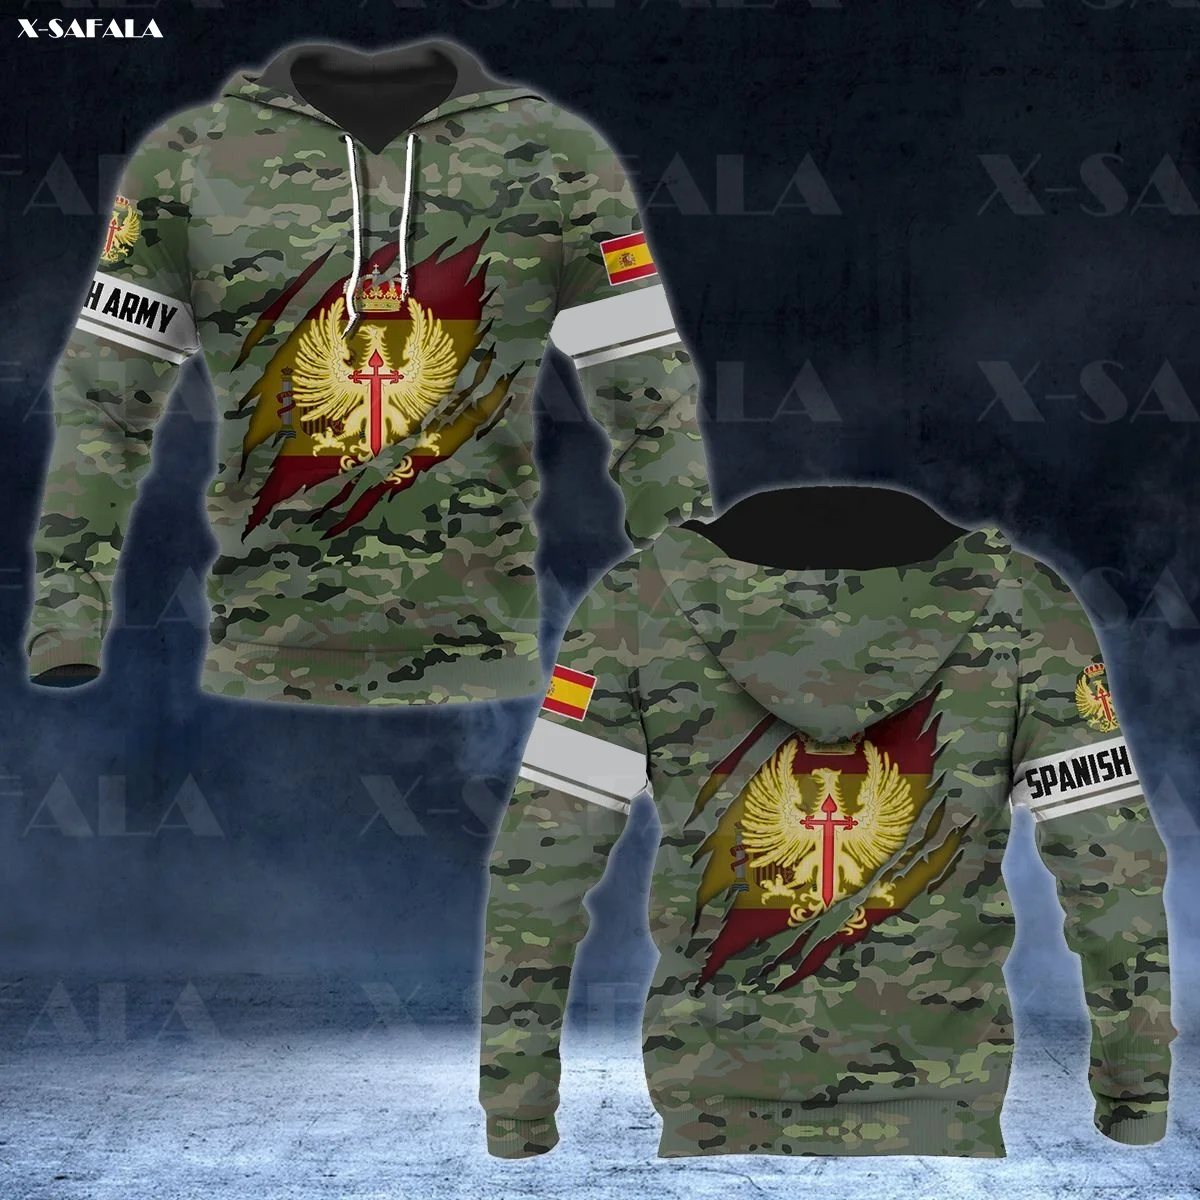 

SPANISH ARMY Camo Veteran Eagle Military 3D Print Zipper Hoodie Man Female Pullover Sweatshirt Hooded Jacket Jersey Tracksuits